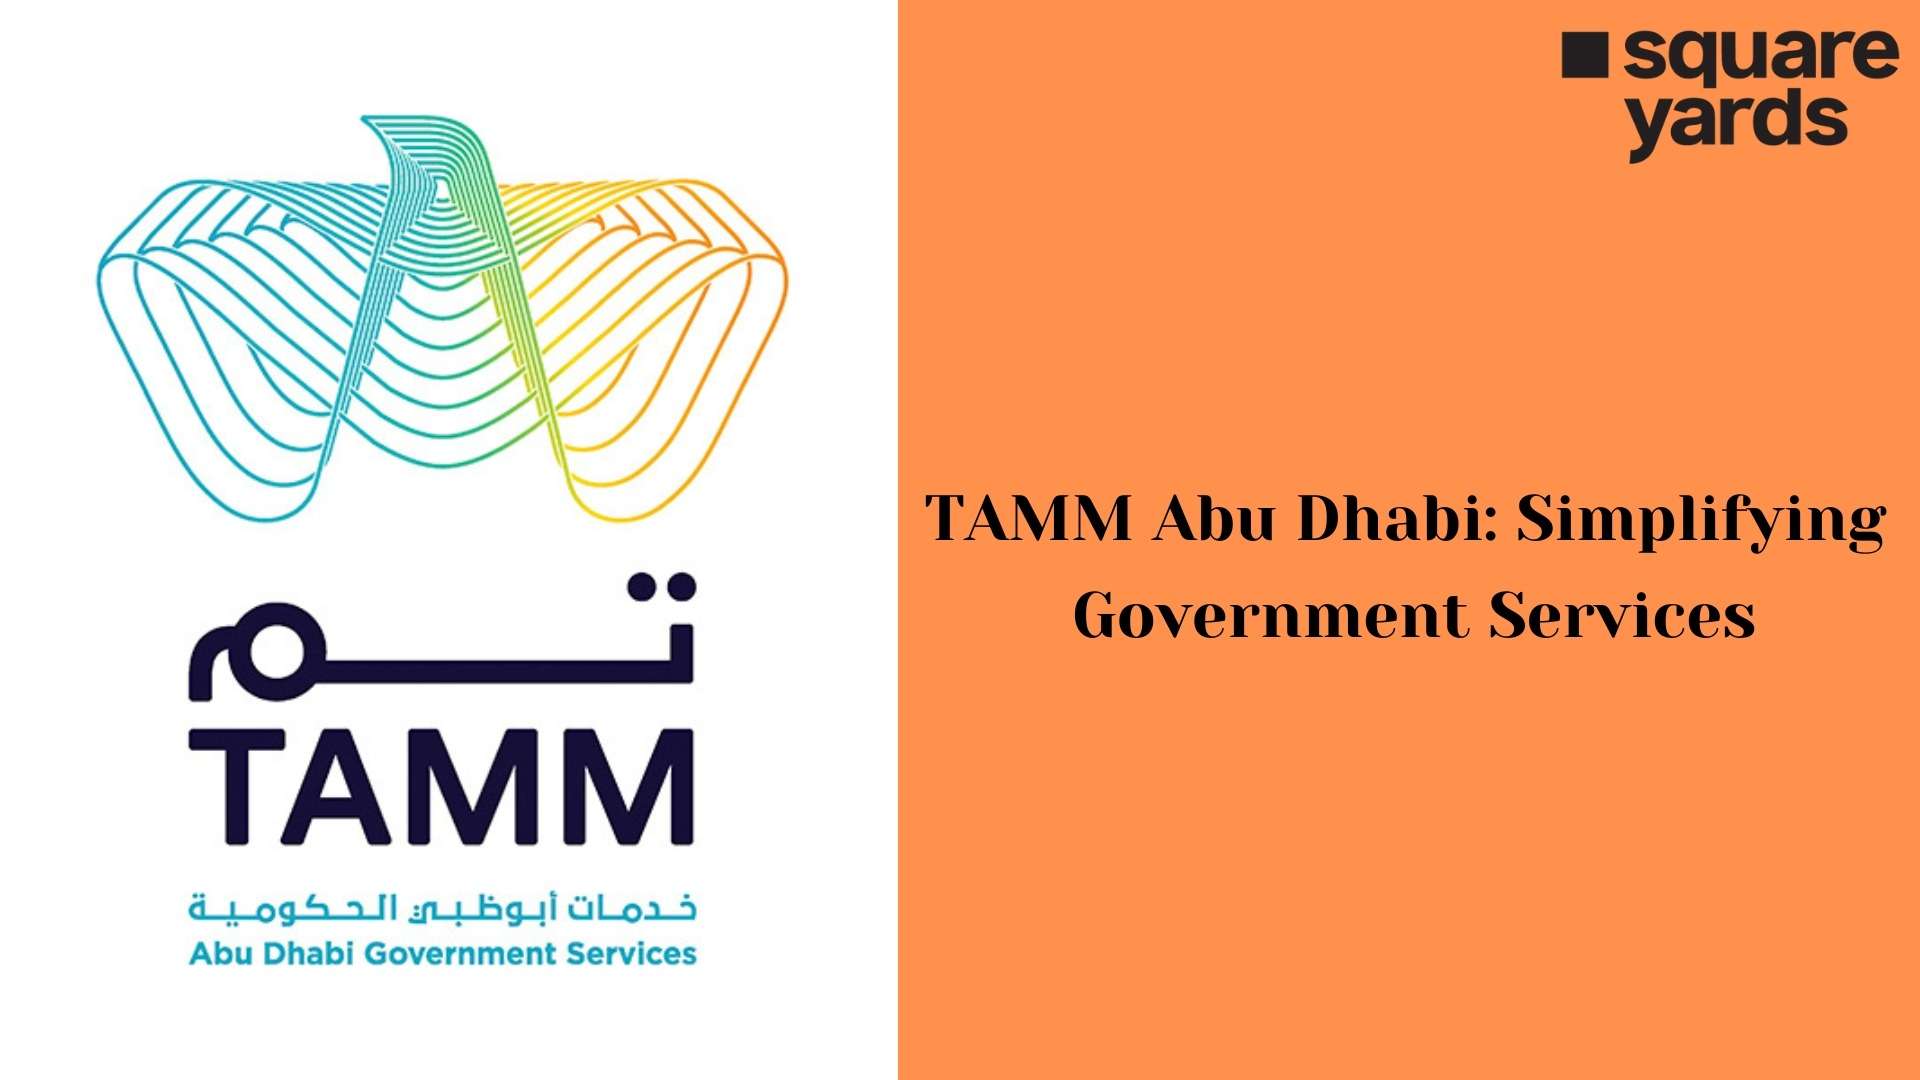 TAMM Abu Dhabi one stop online application